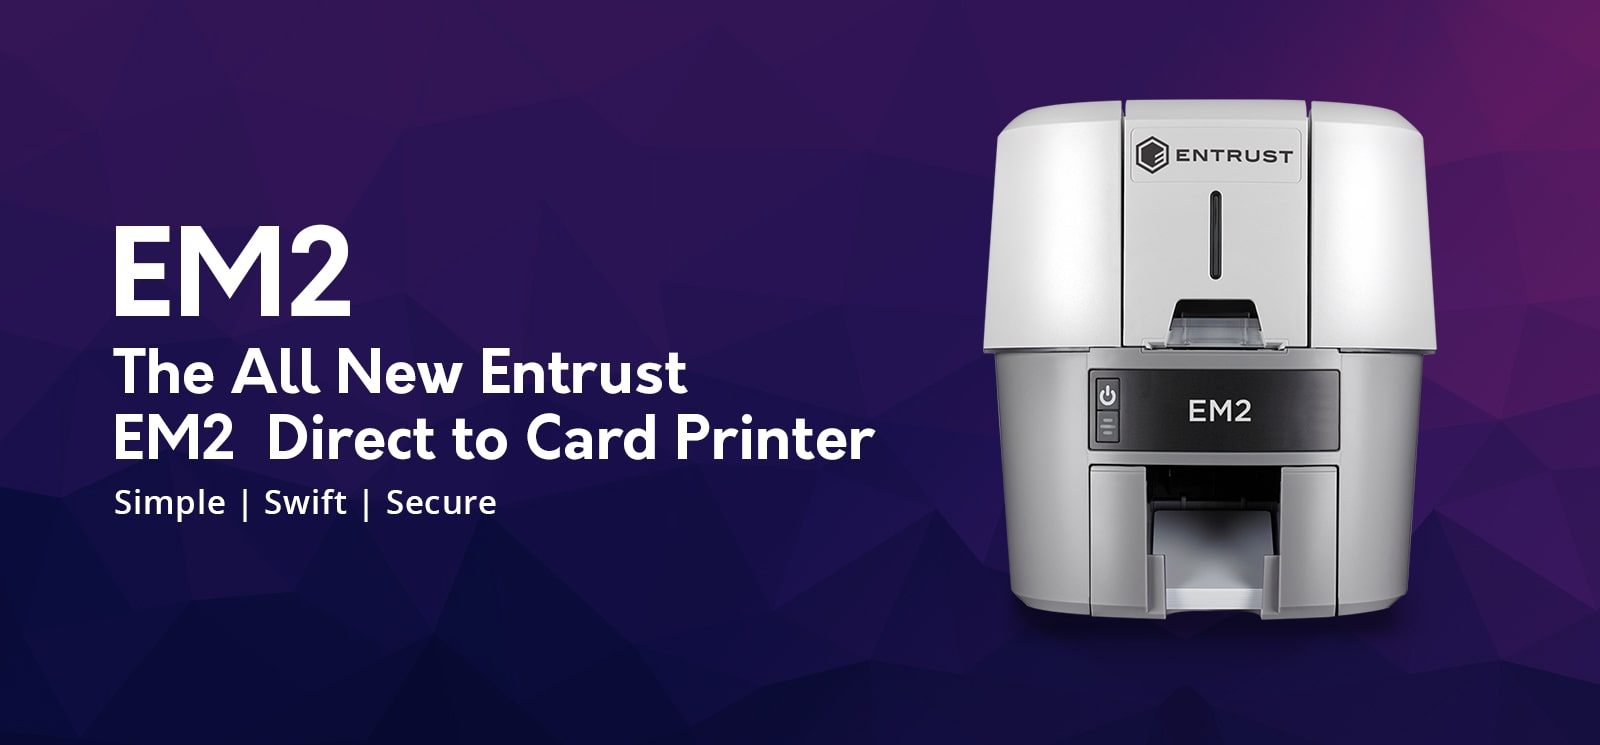 Entrust Datacard ID Card Printers in India Entrust Datacard Printers in India